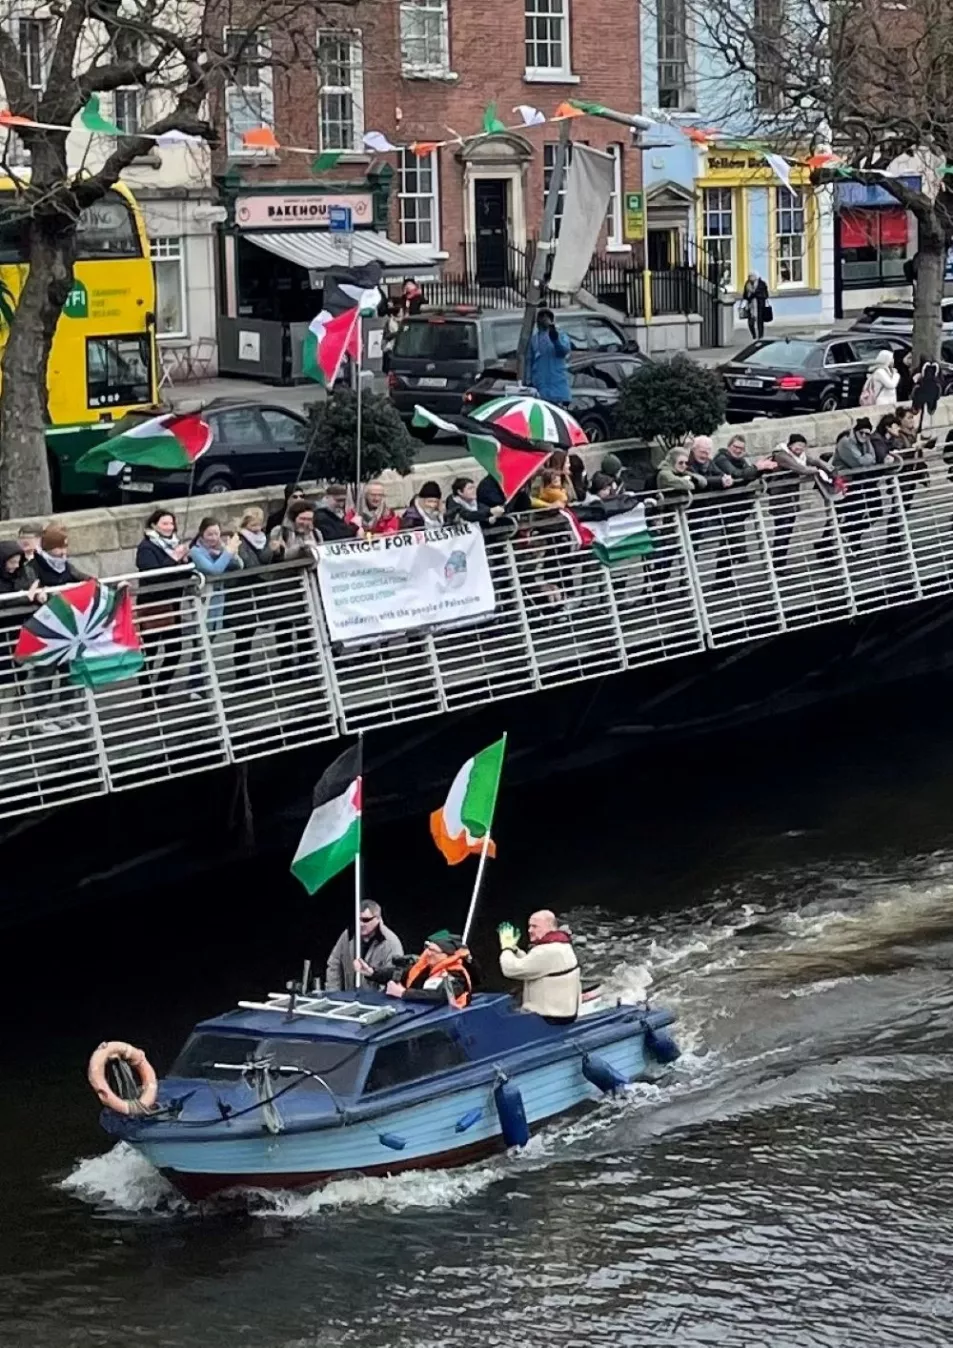 The demonstration around the Ha’Penny Bridge on Dublin’s River Liffey